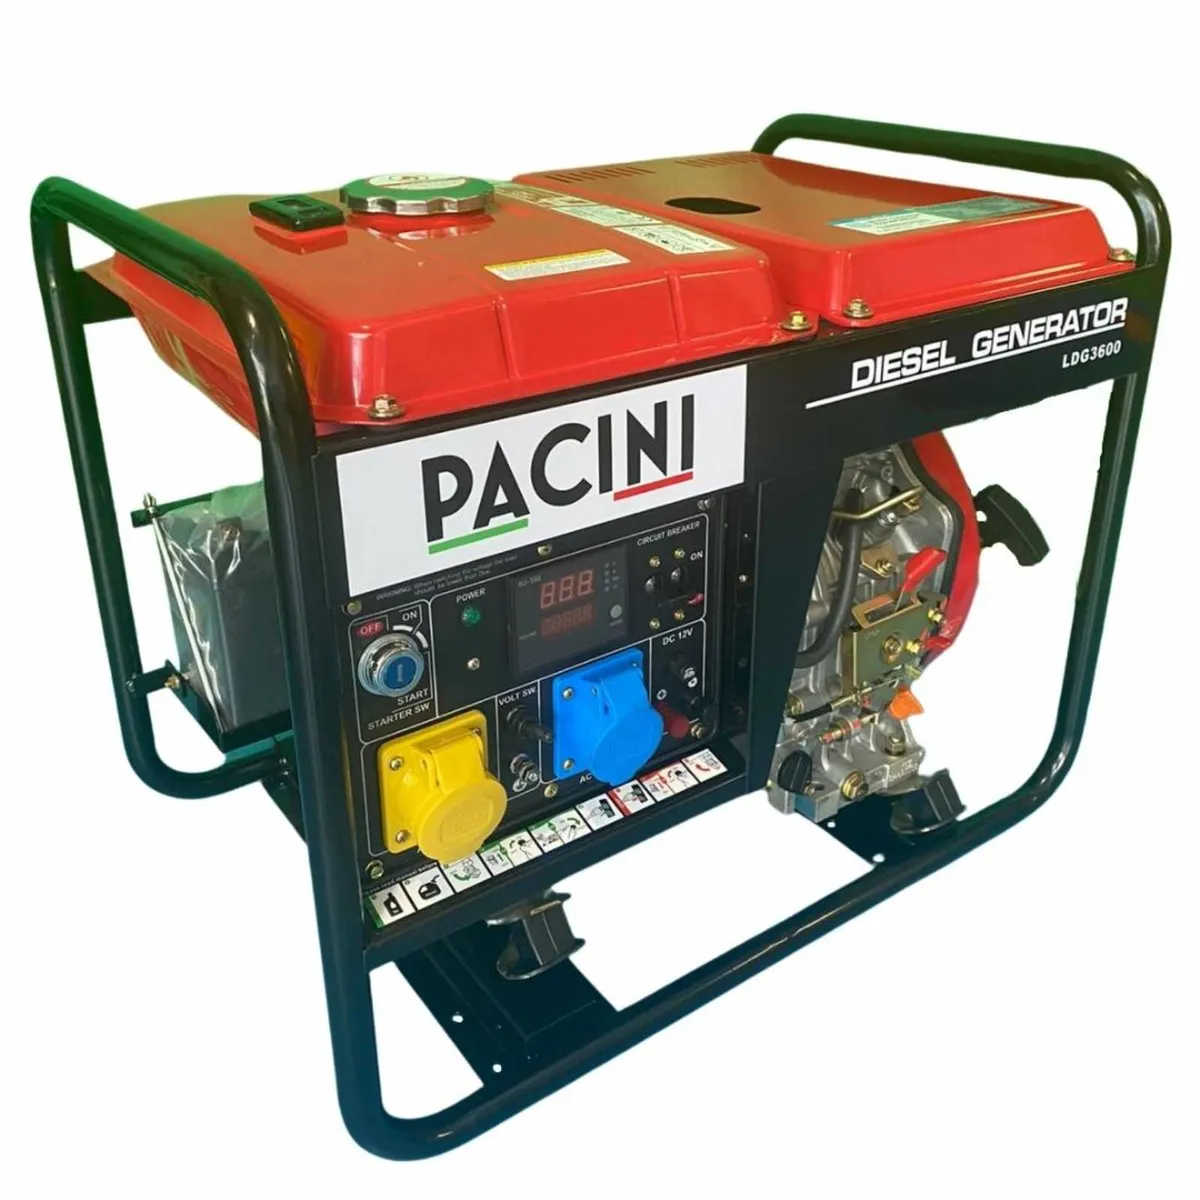 PACINI 3.6KVA Diesel Generator with electric start - Image 1